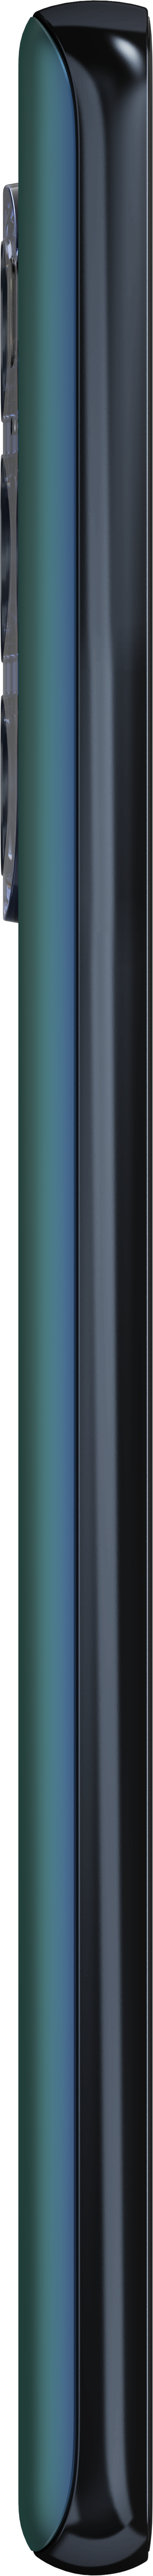 Motorola Edge 30 Pro 256GB Dual-SIM Kosmosblå